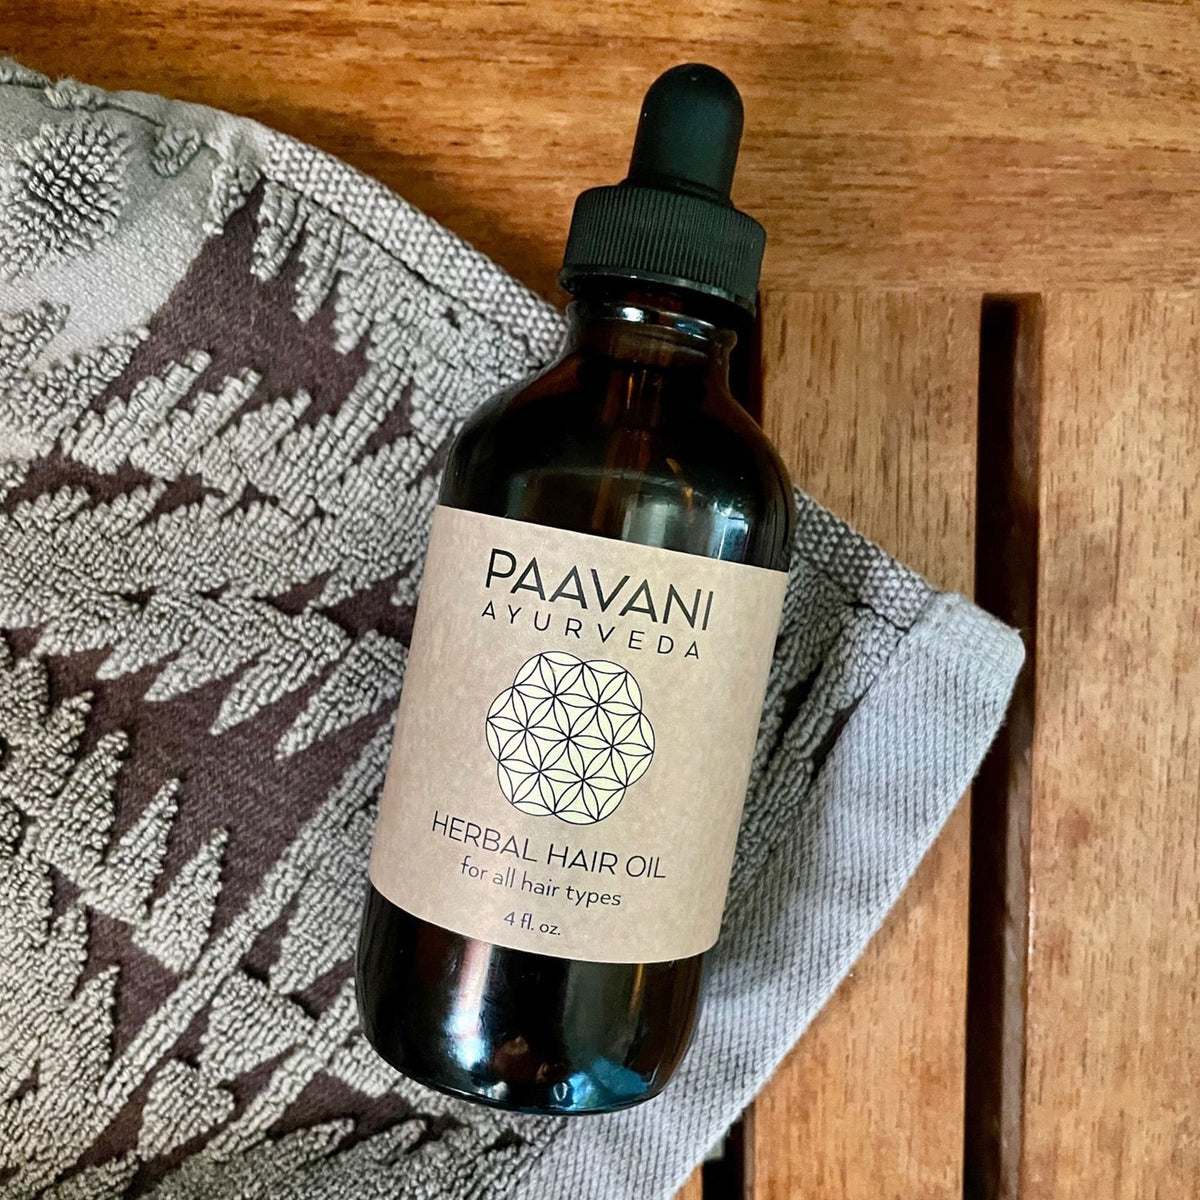 Paavani Ayurveda - Organic Herbal Hair Oil for All Hair Types 4 oz.